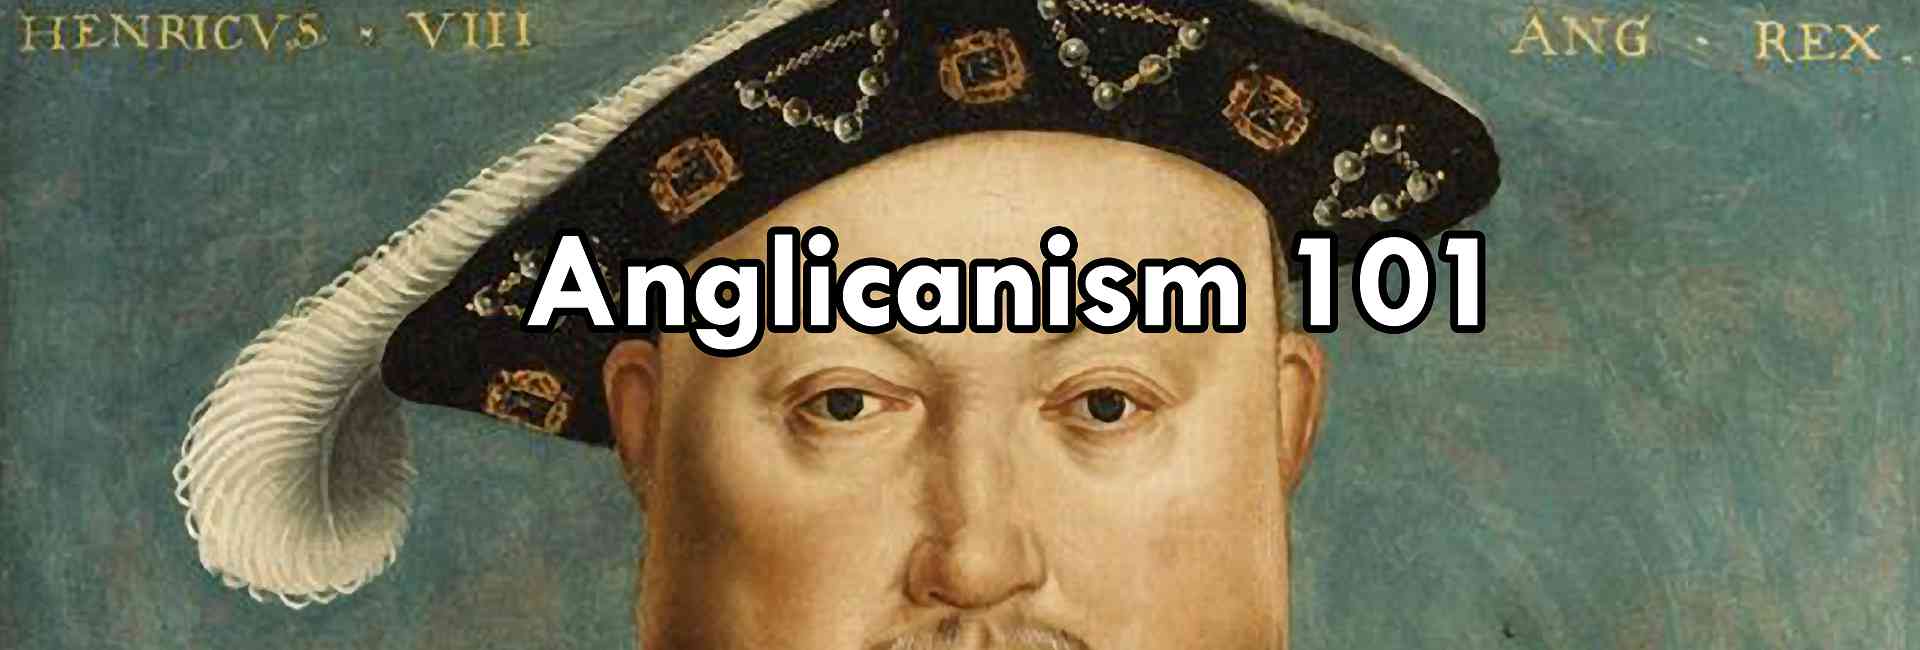 Anglicanism 101